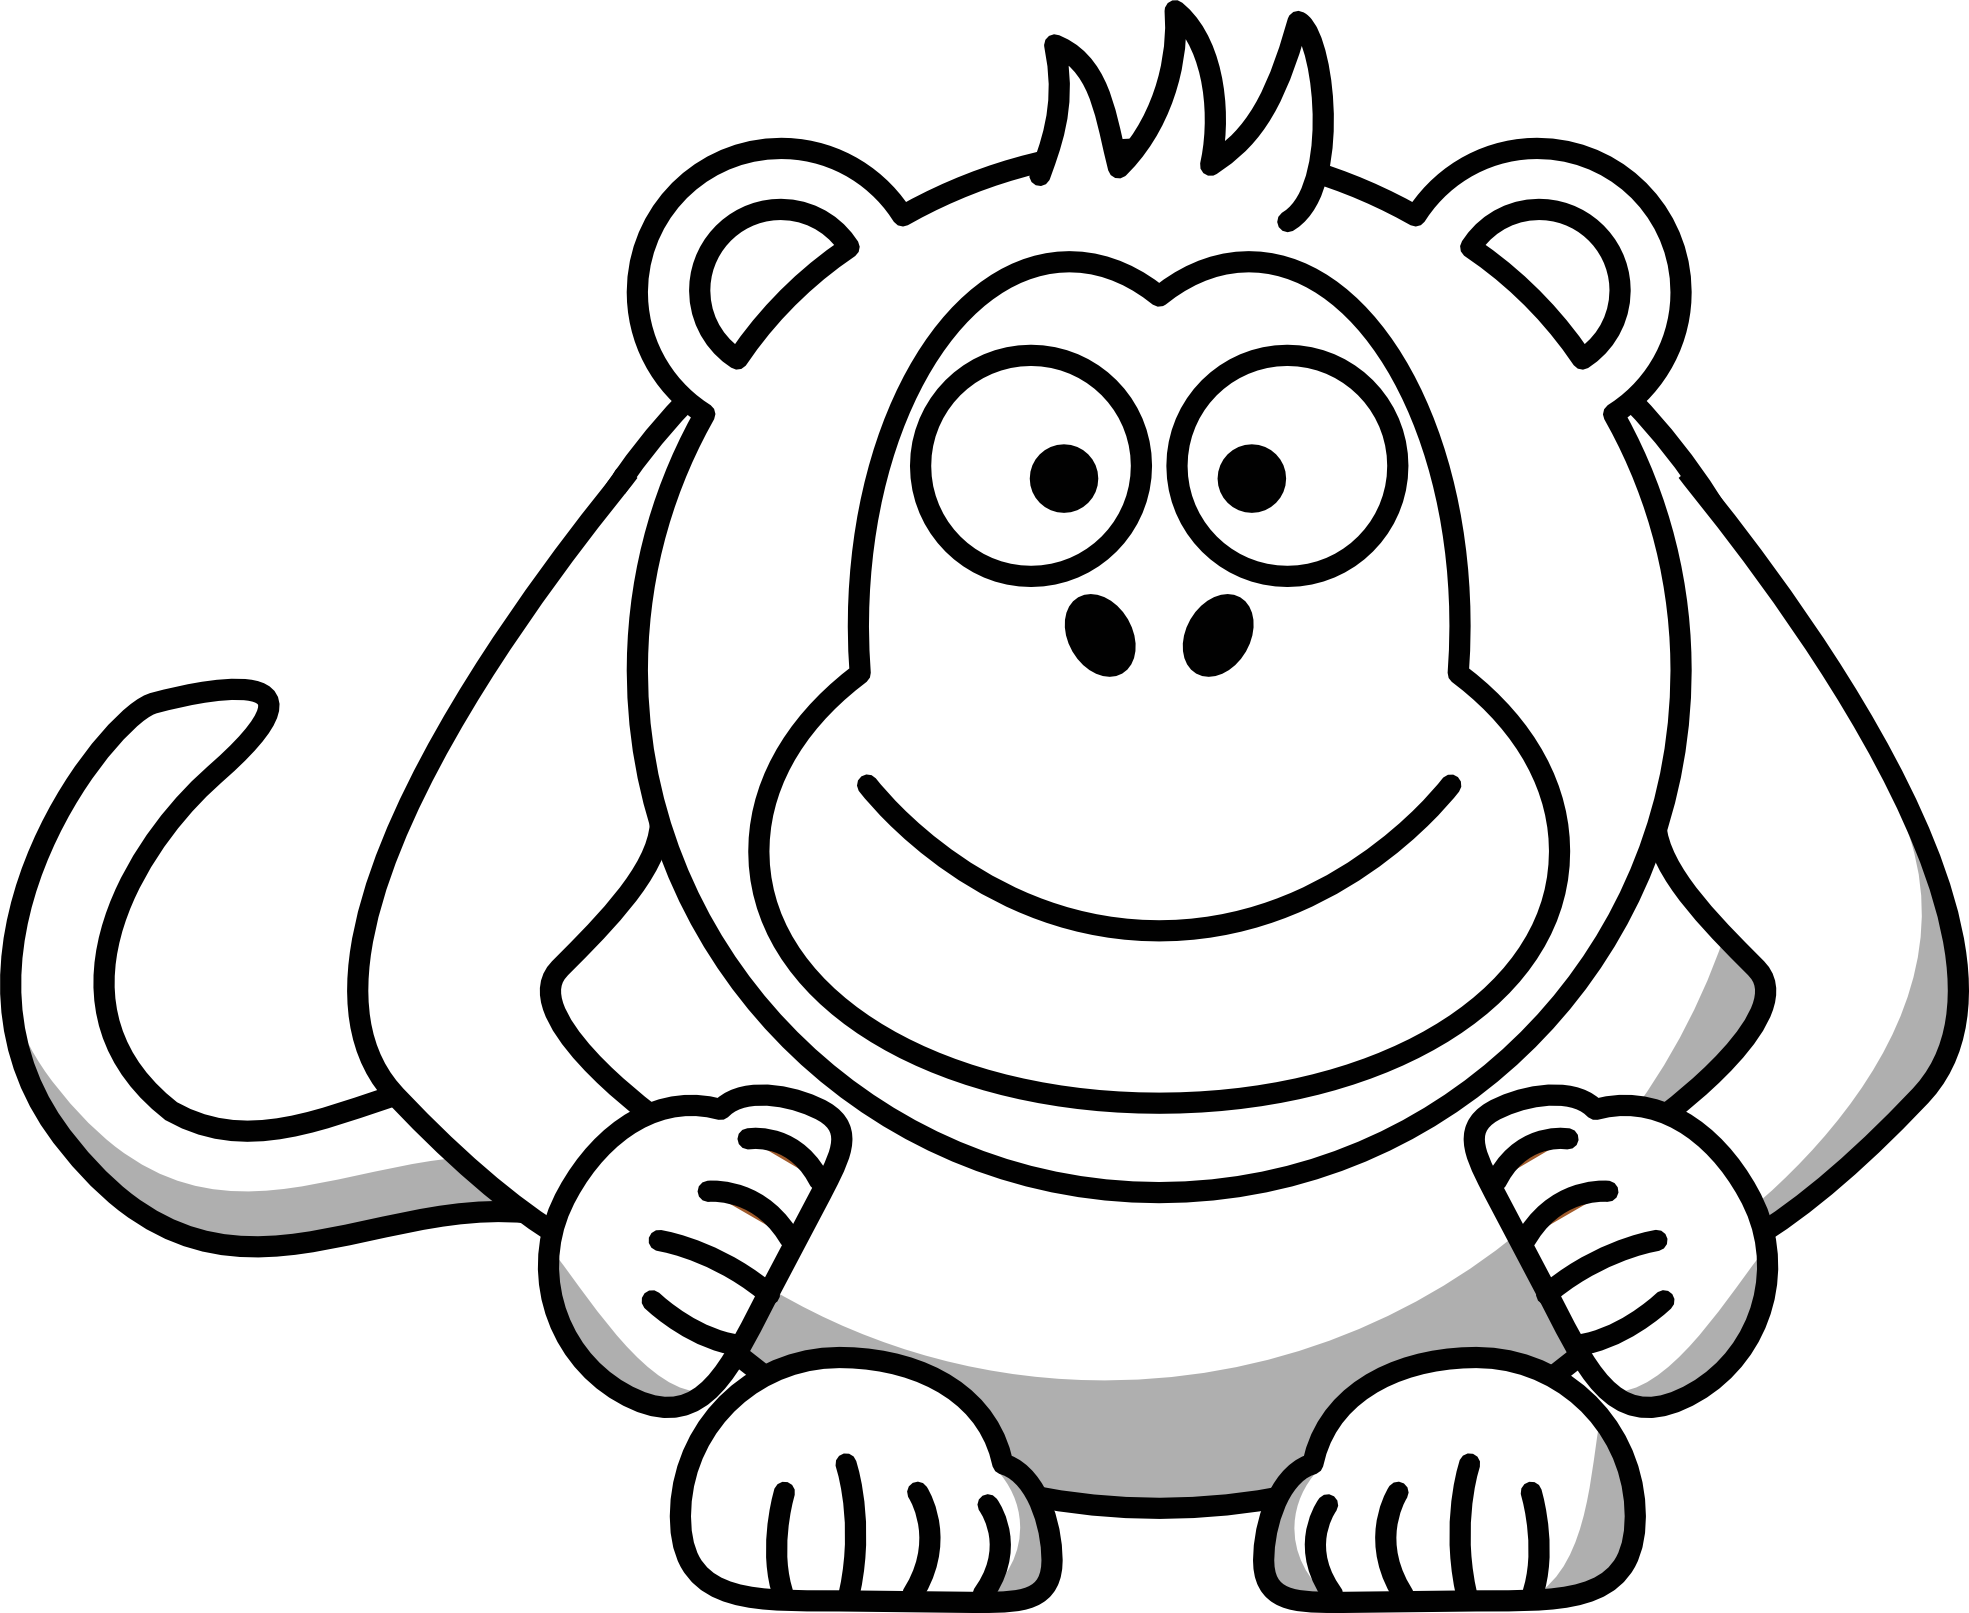 Cartoon Monkey Black White Line Art SVG Inkscape Adobe Illustrator ...